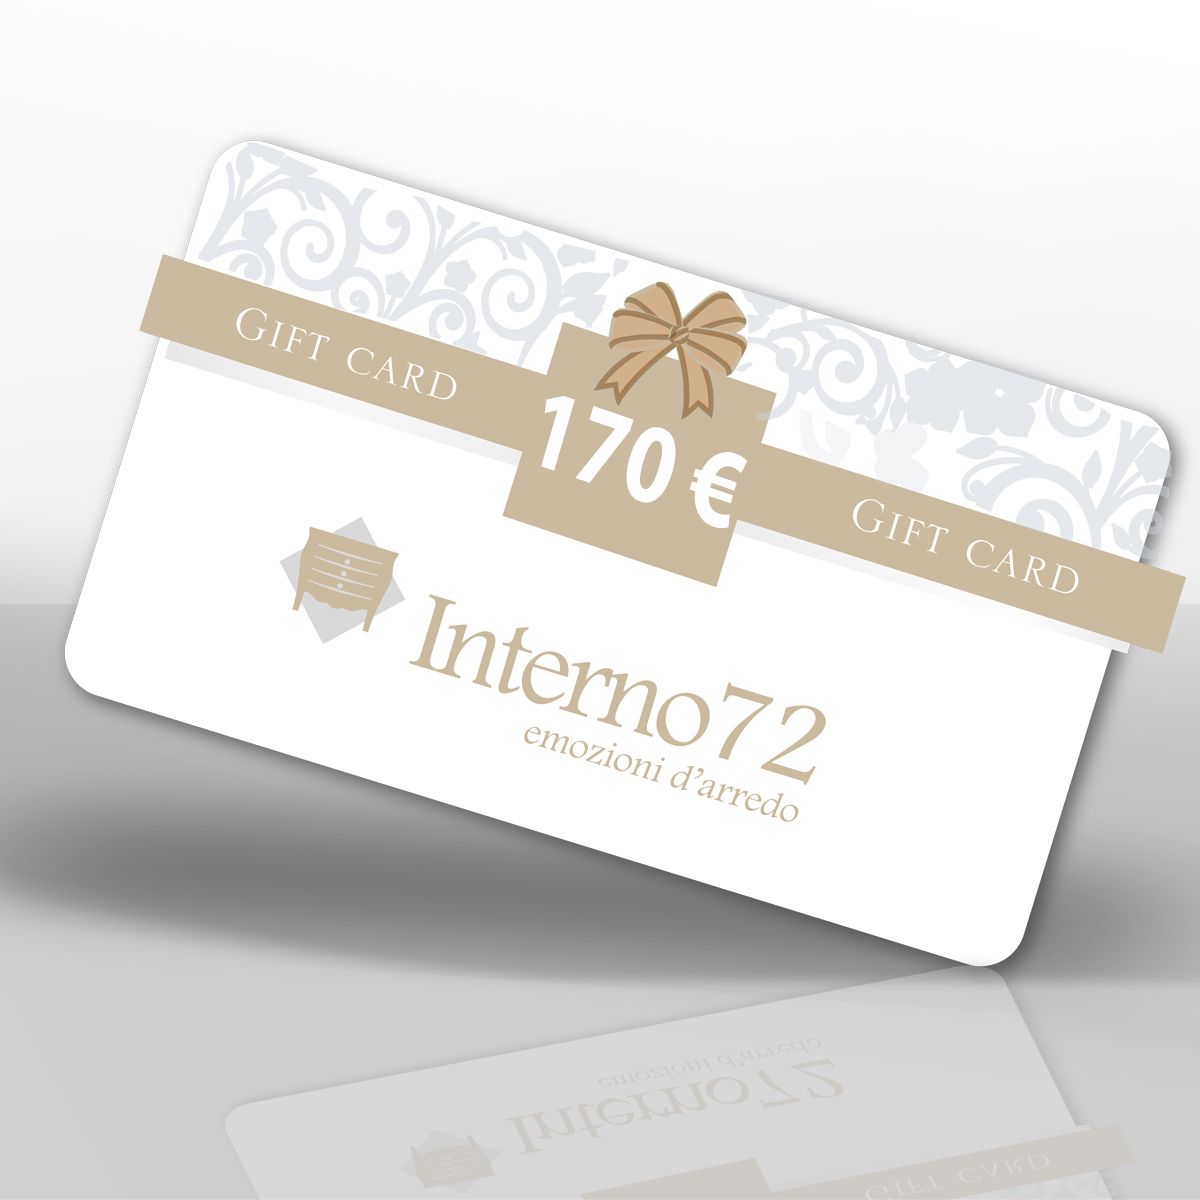 Gift Card 170 euro